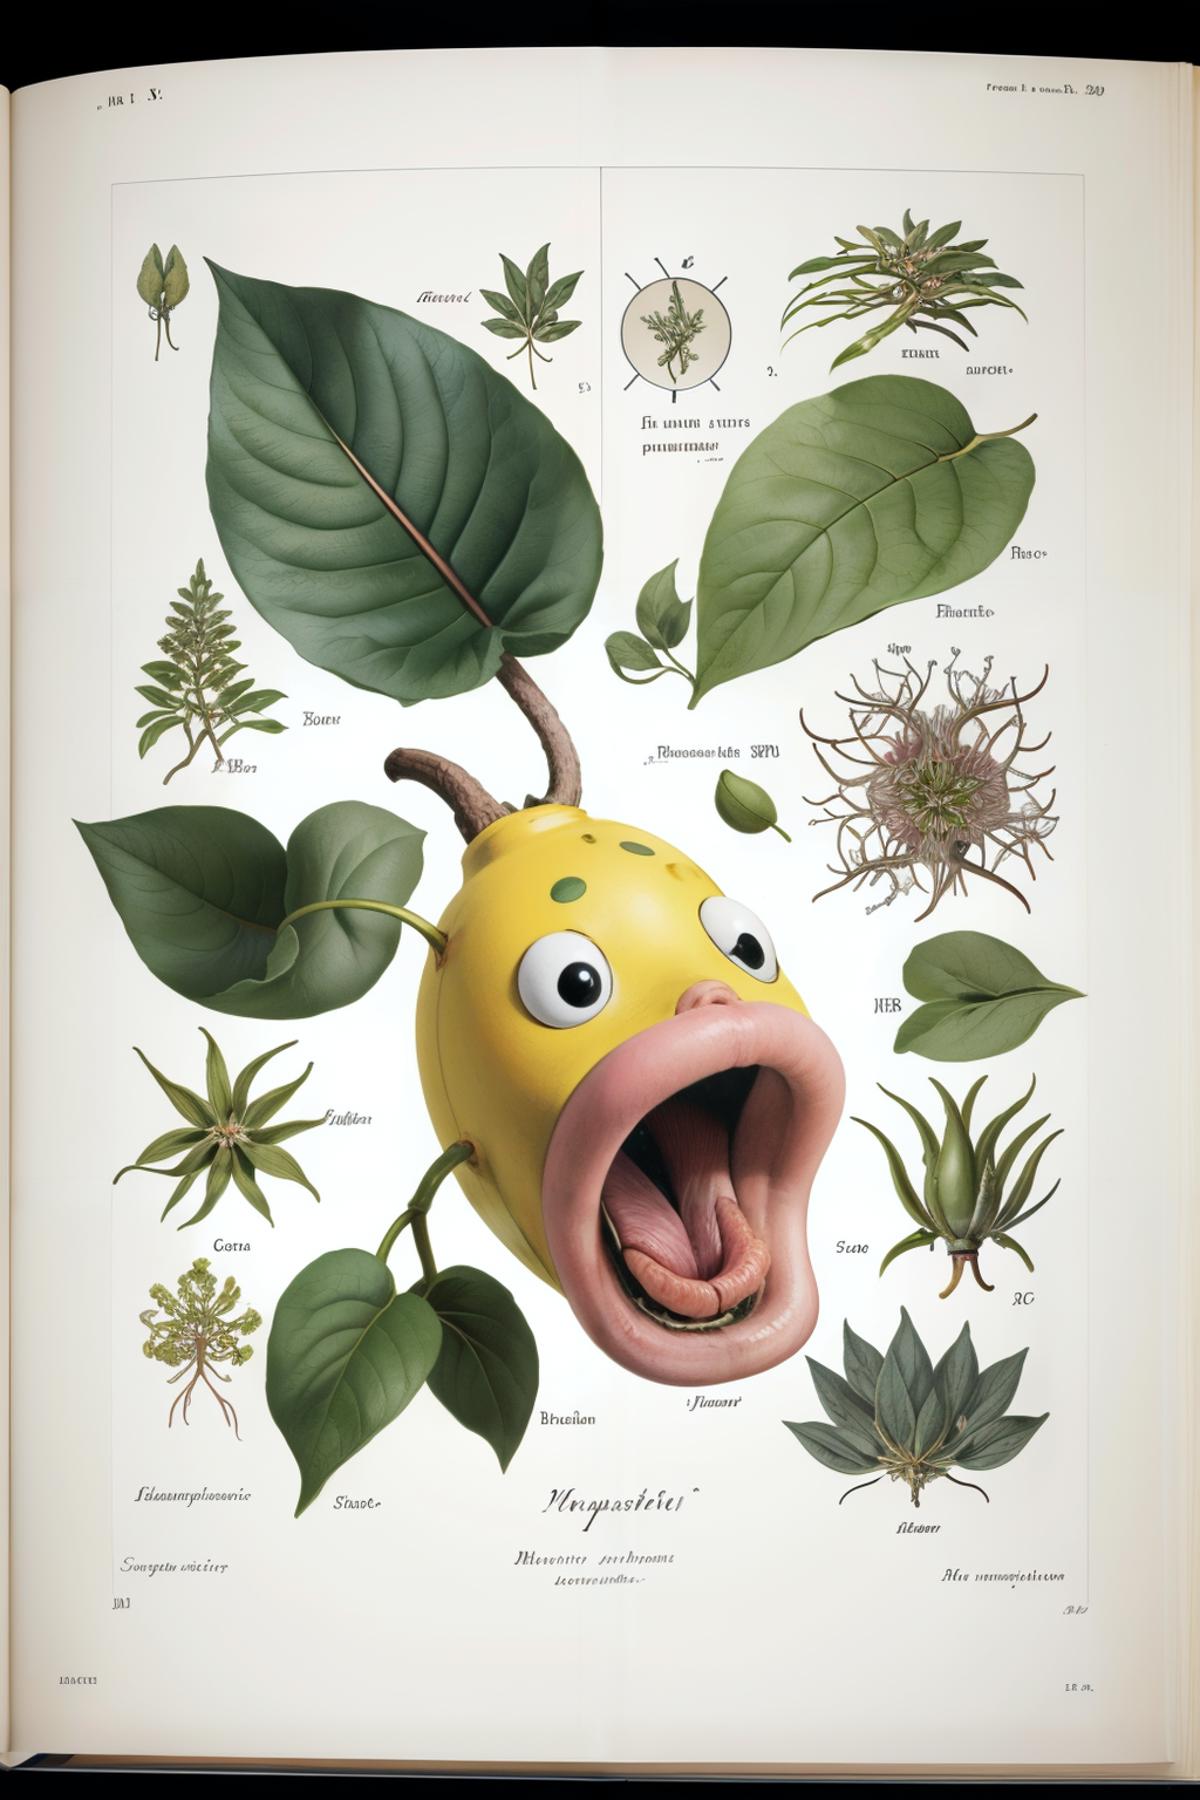 Vanilla Botanical Art image by MasterBates